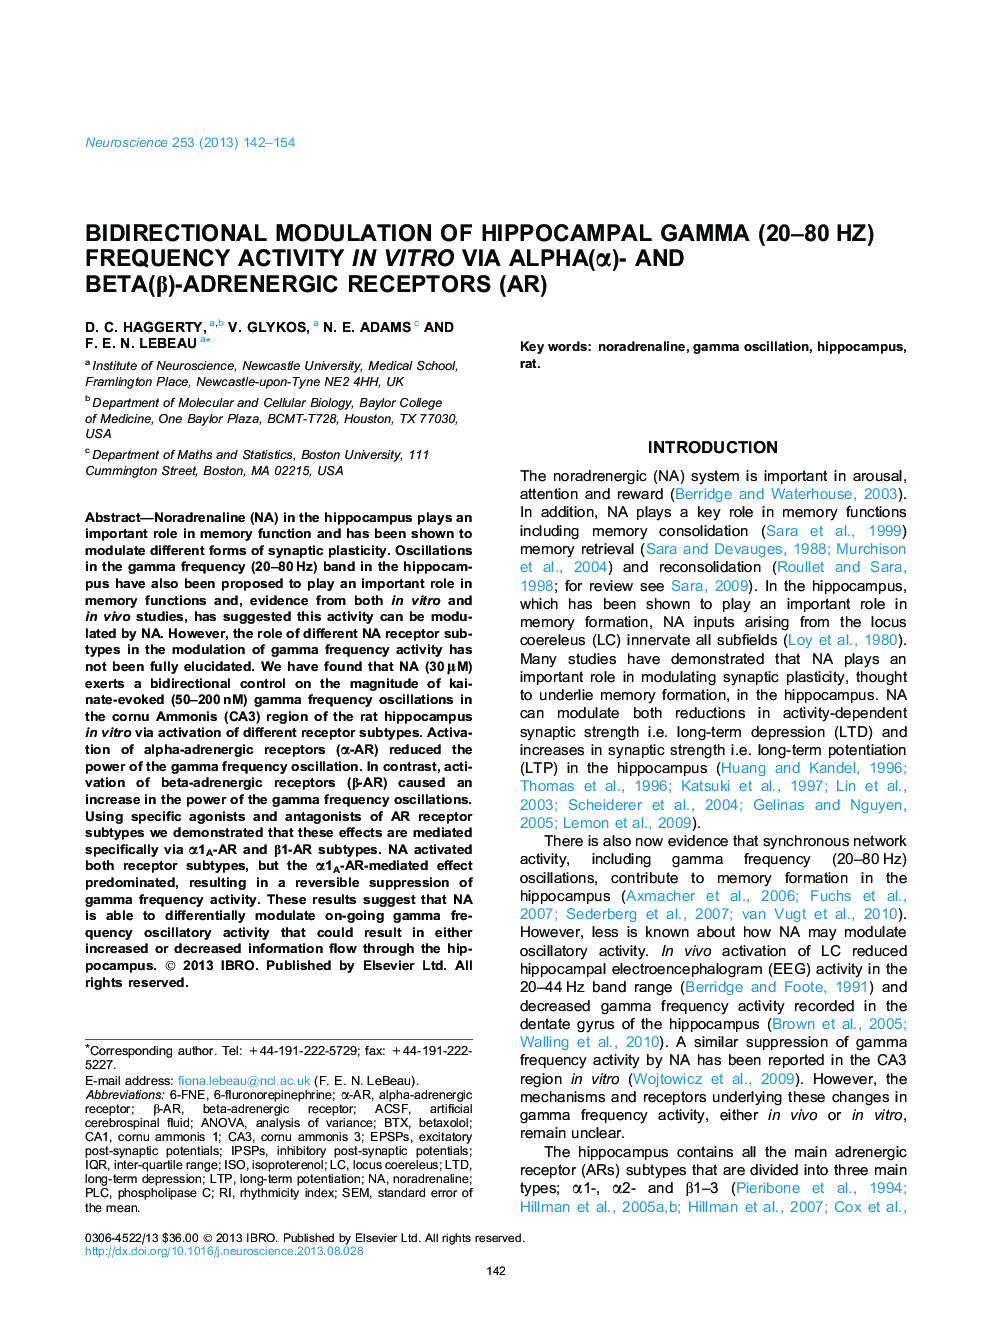 Bidirectional modulation of hippocampal gamma (20-80Â Hz) frequency activity in vitro via alpha(Î±)- and beta(Î²)-adrenergic receptors (AR)